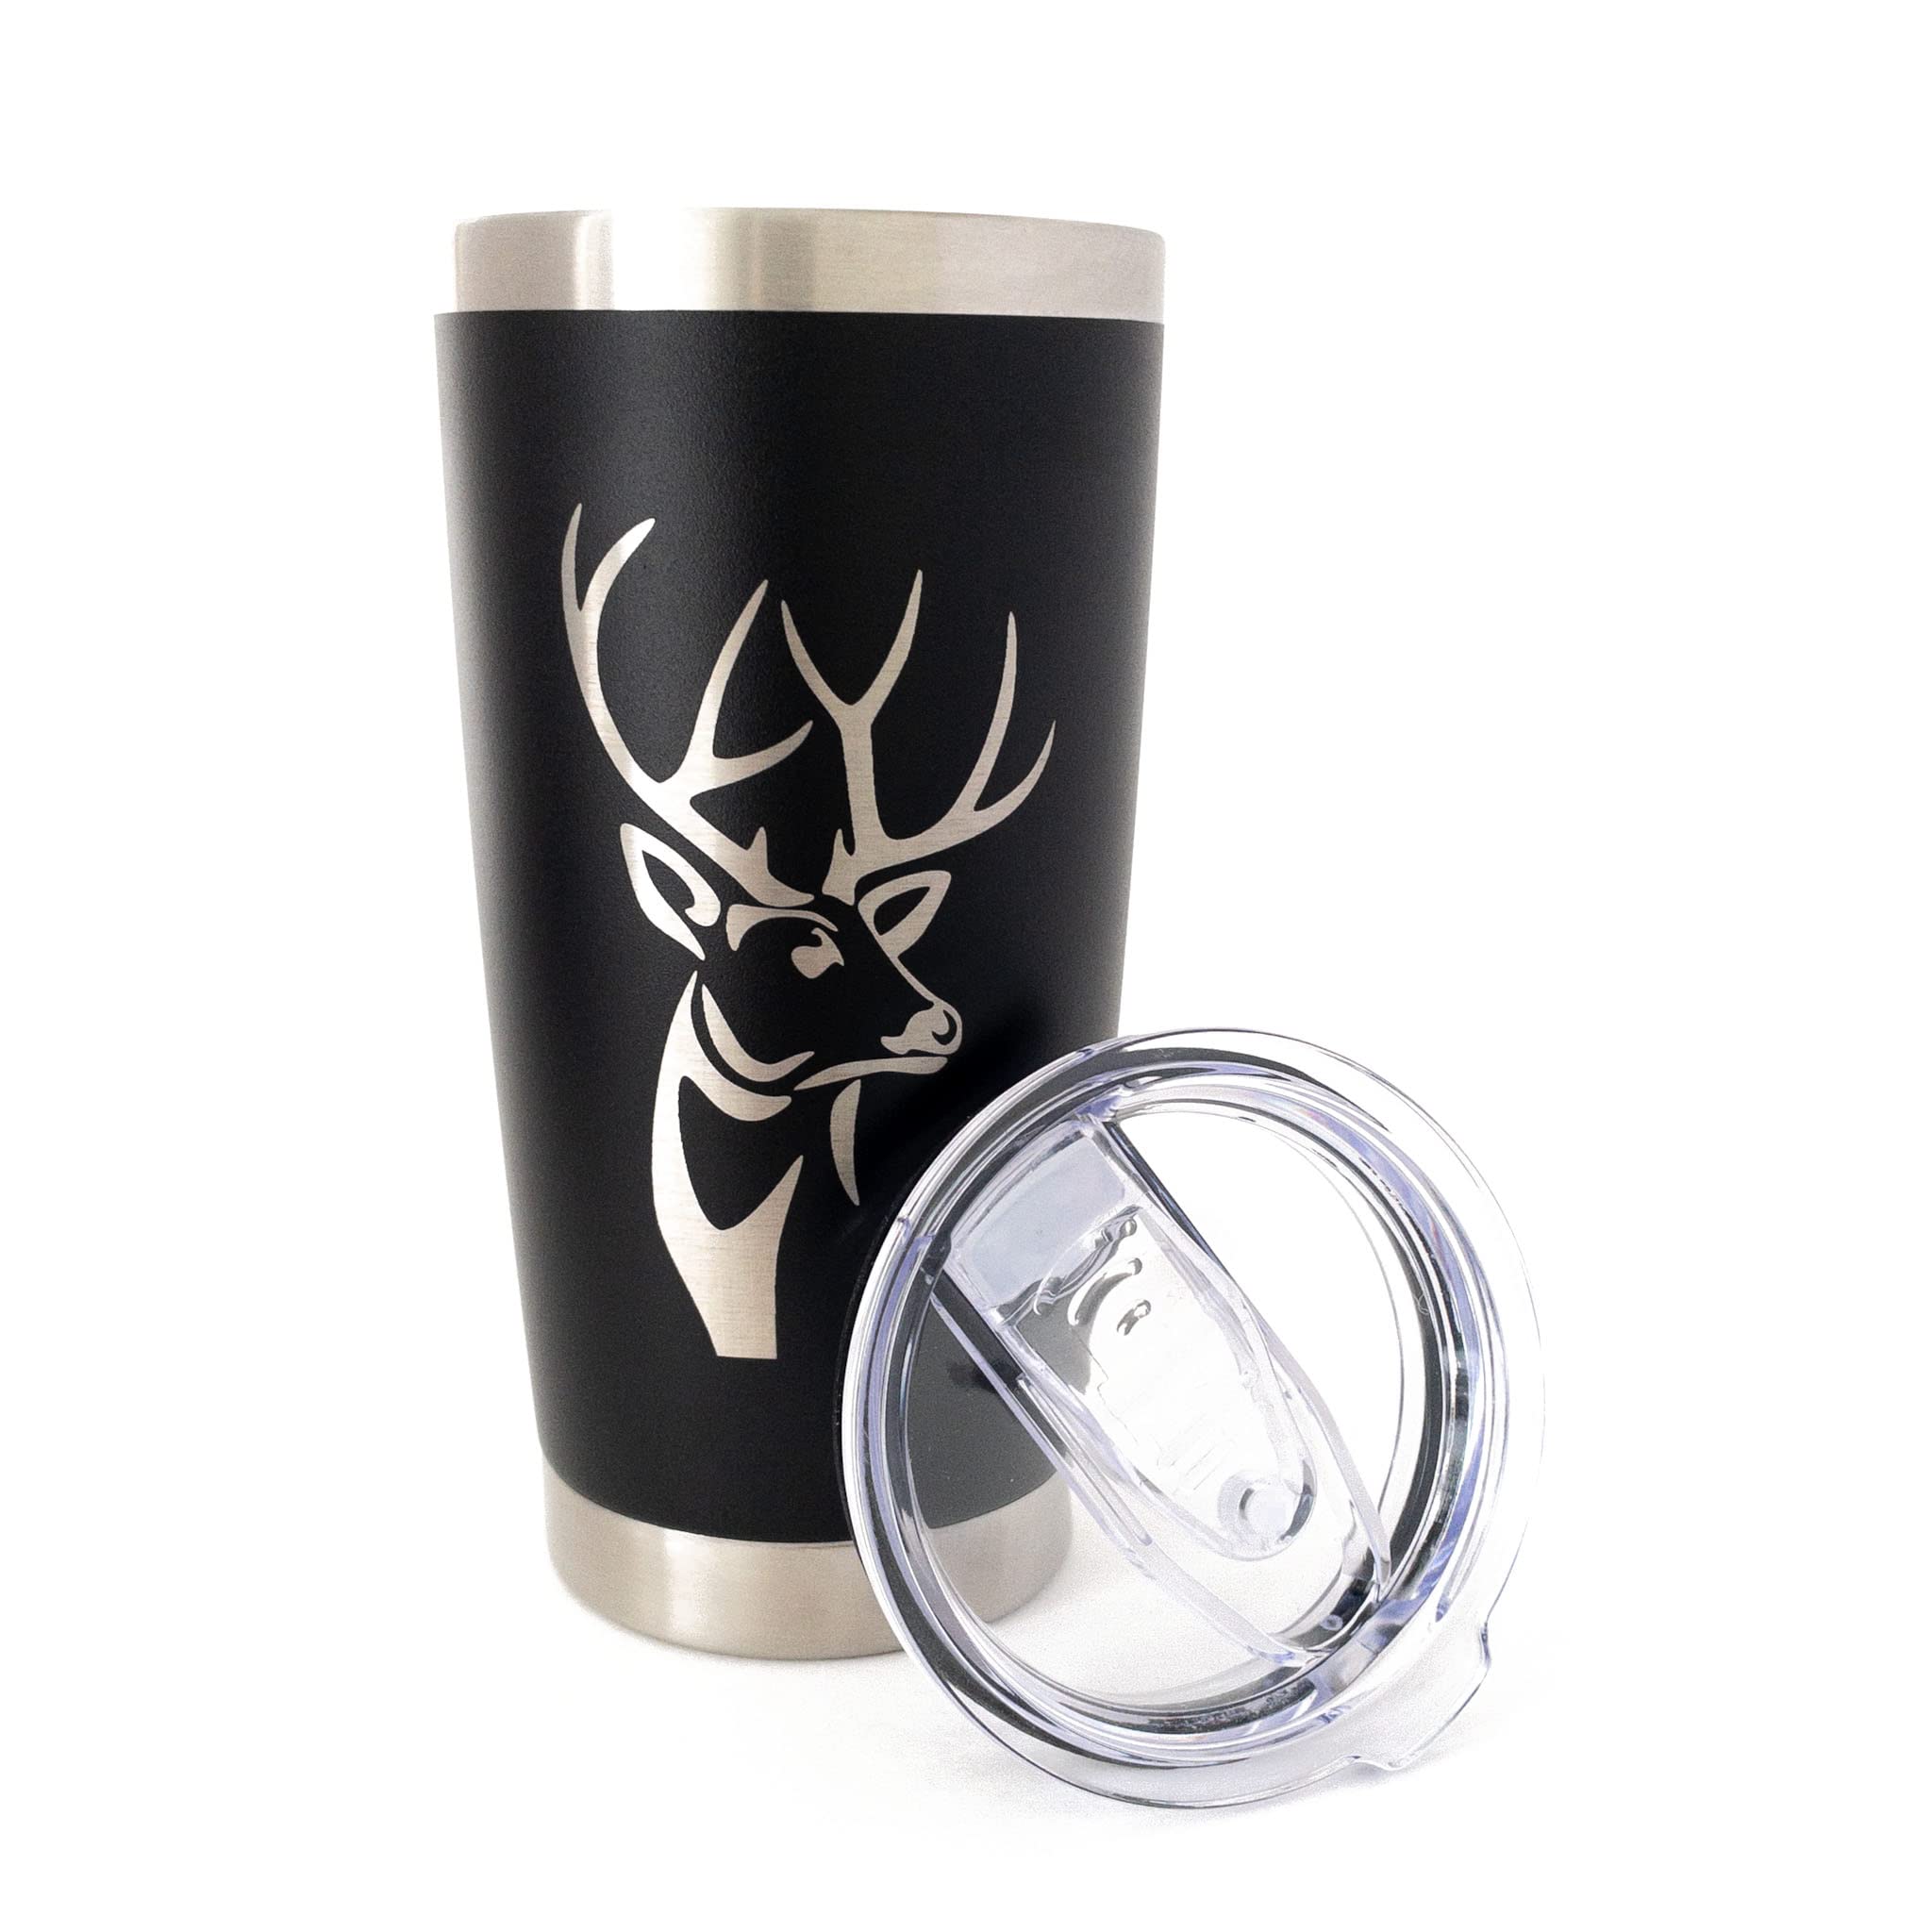 Deer Hunting 20oz Coffee Mug (Black), Hunting Gifts Travel Mug, Coffee Tumbler for Men, Outdoorsy Gifts